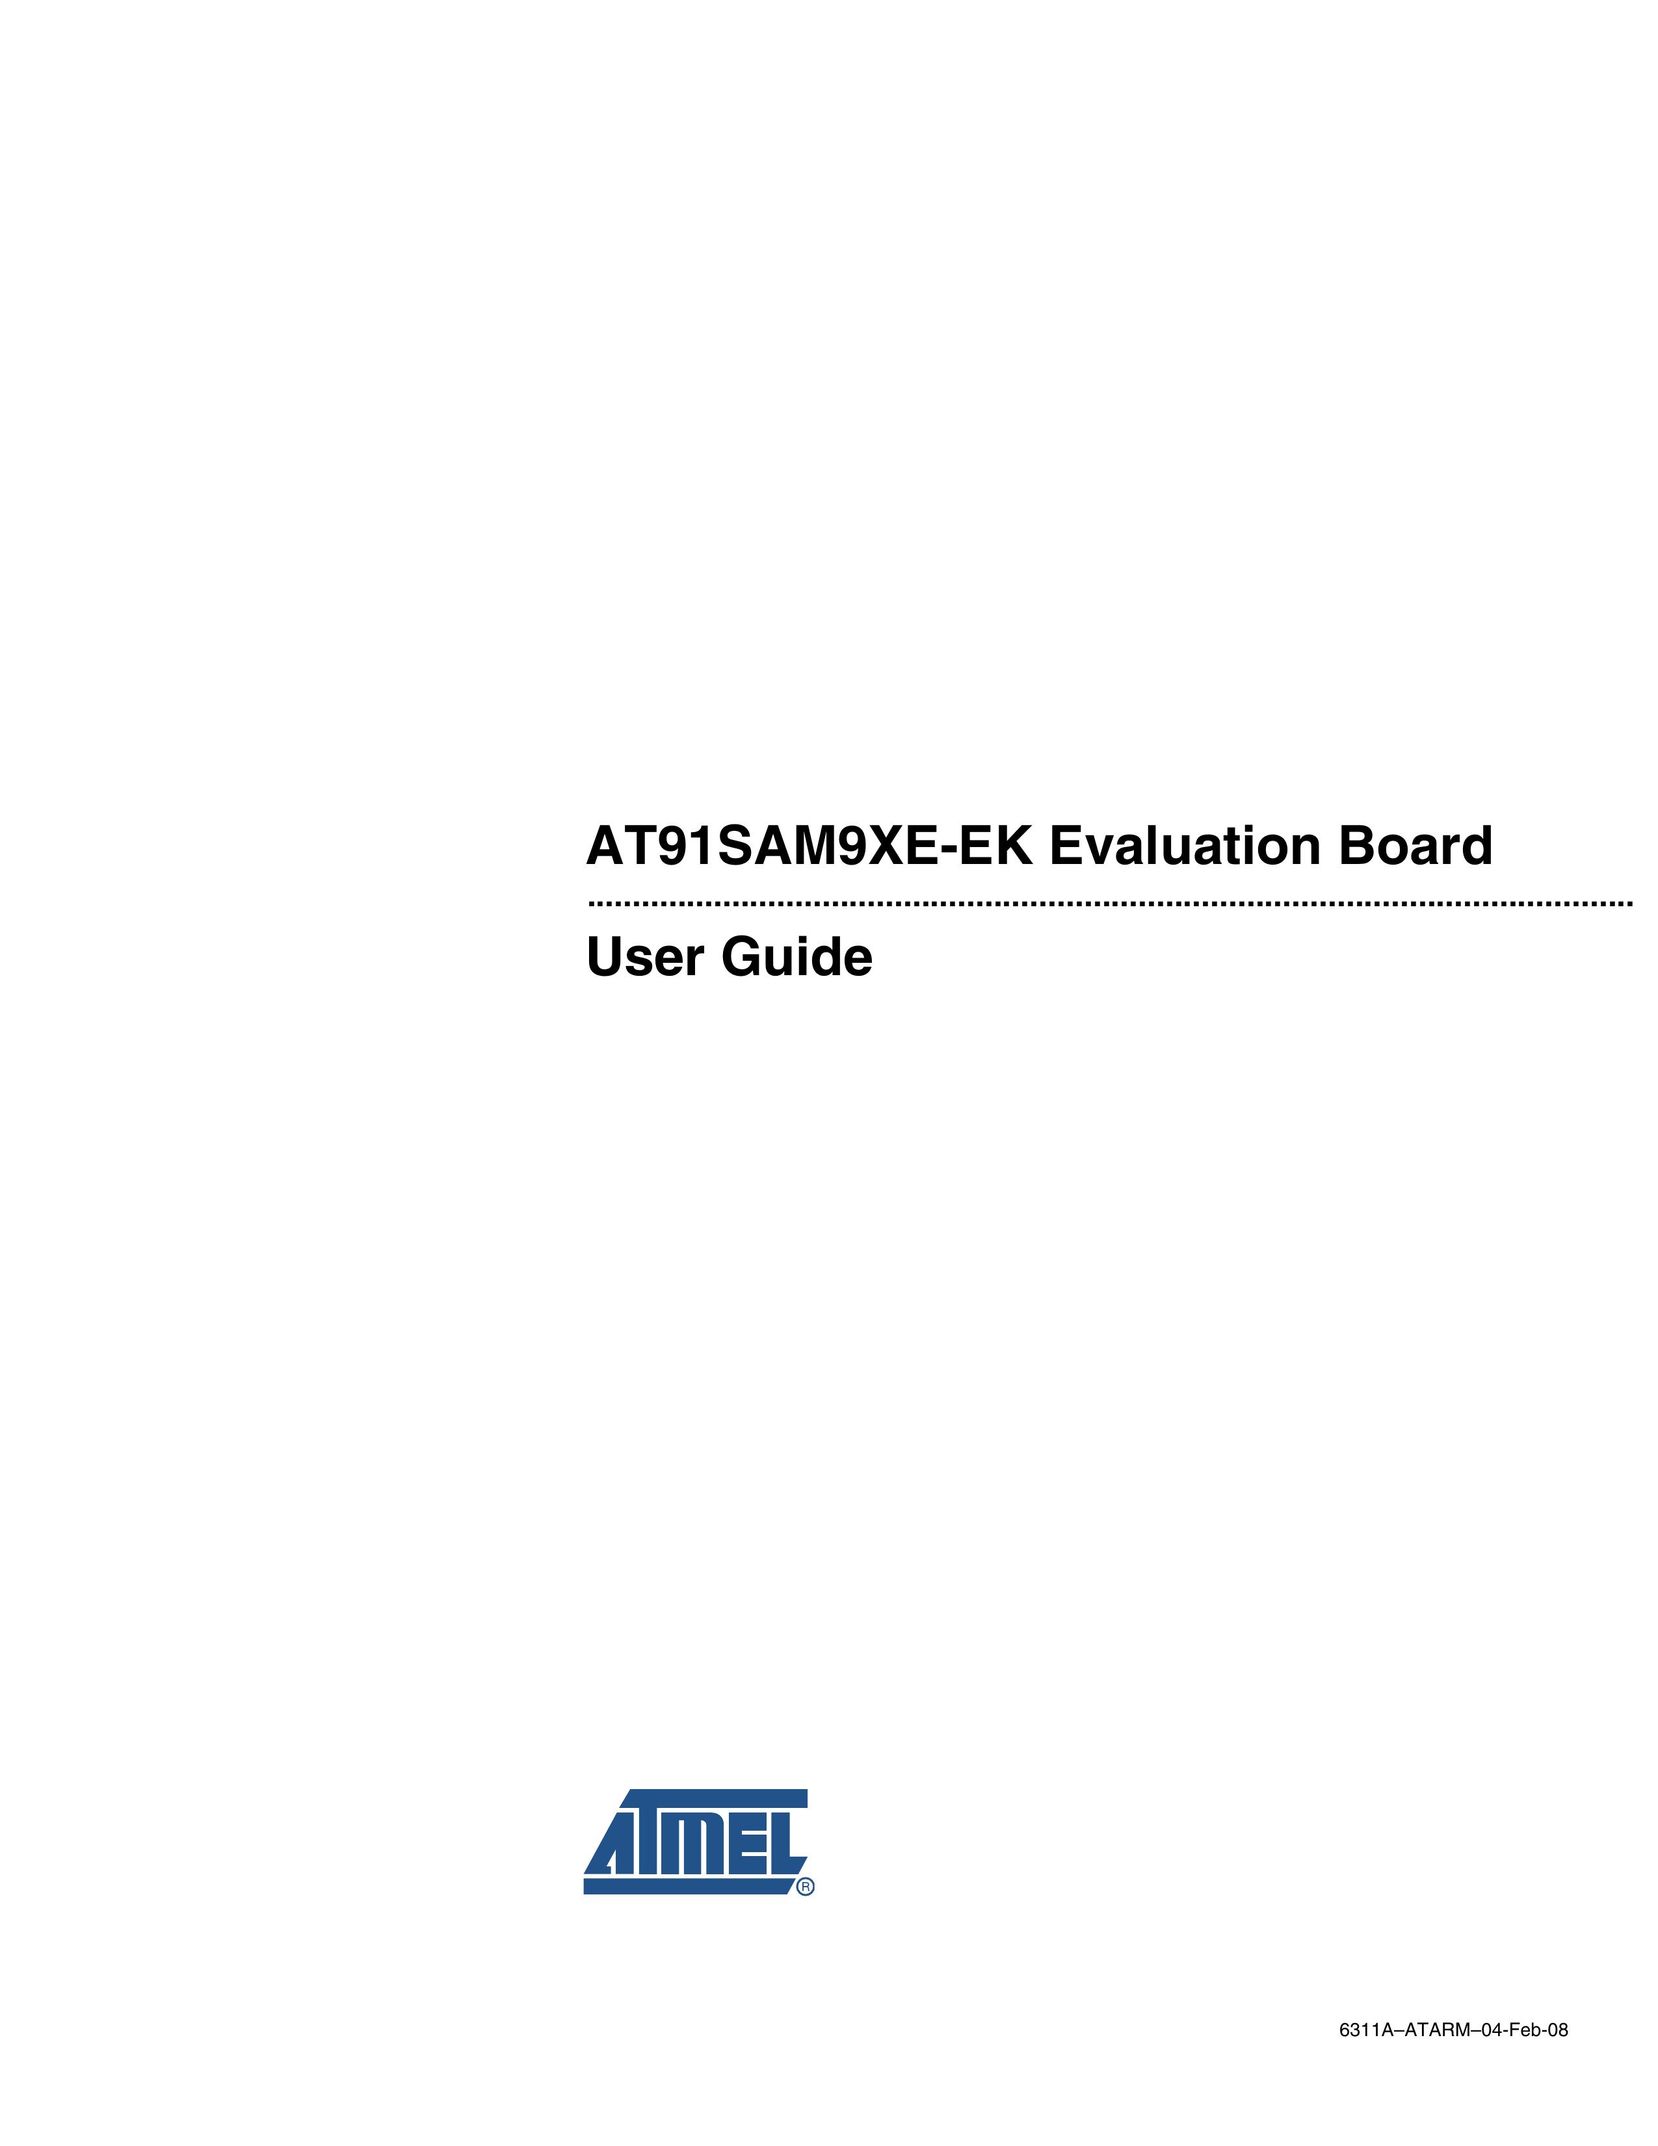 Atmel AT91SAM9XE-EK Network Card User Manual